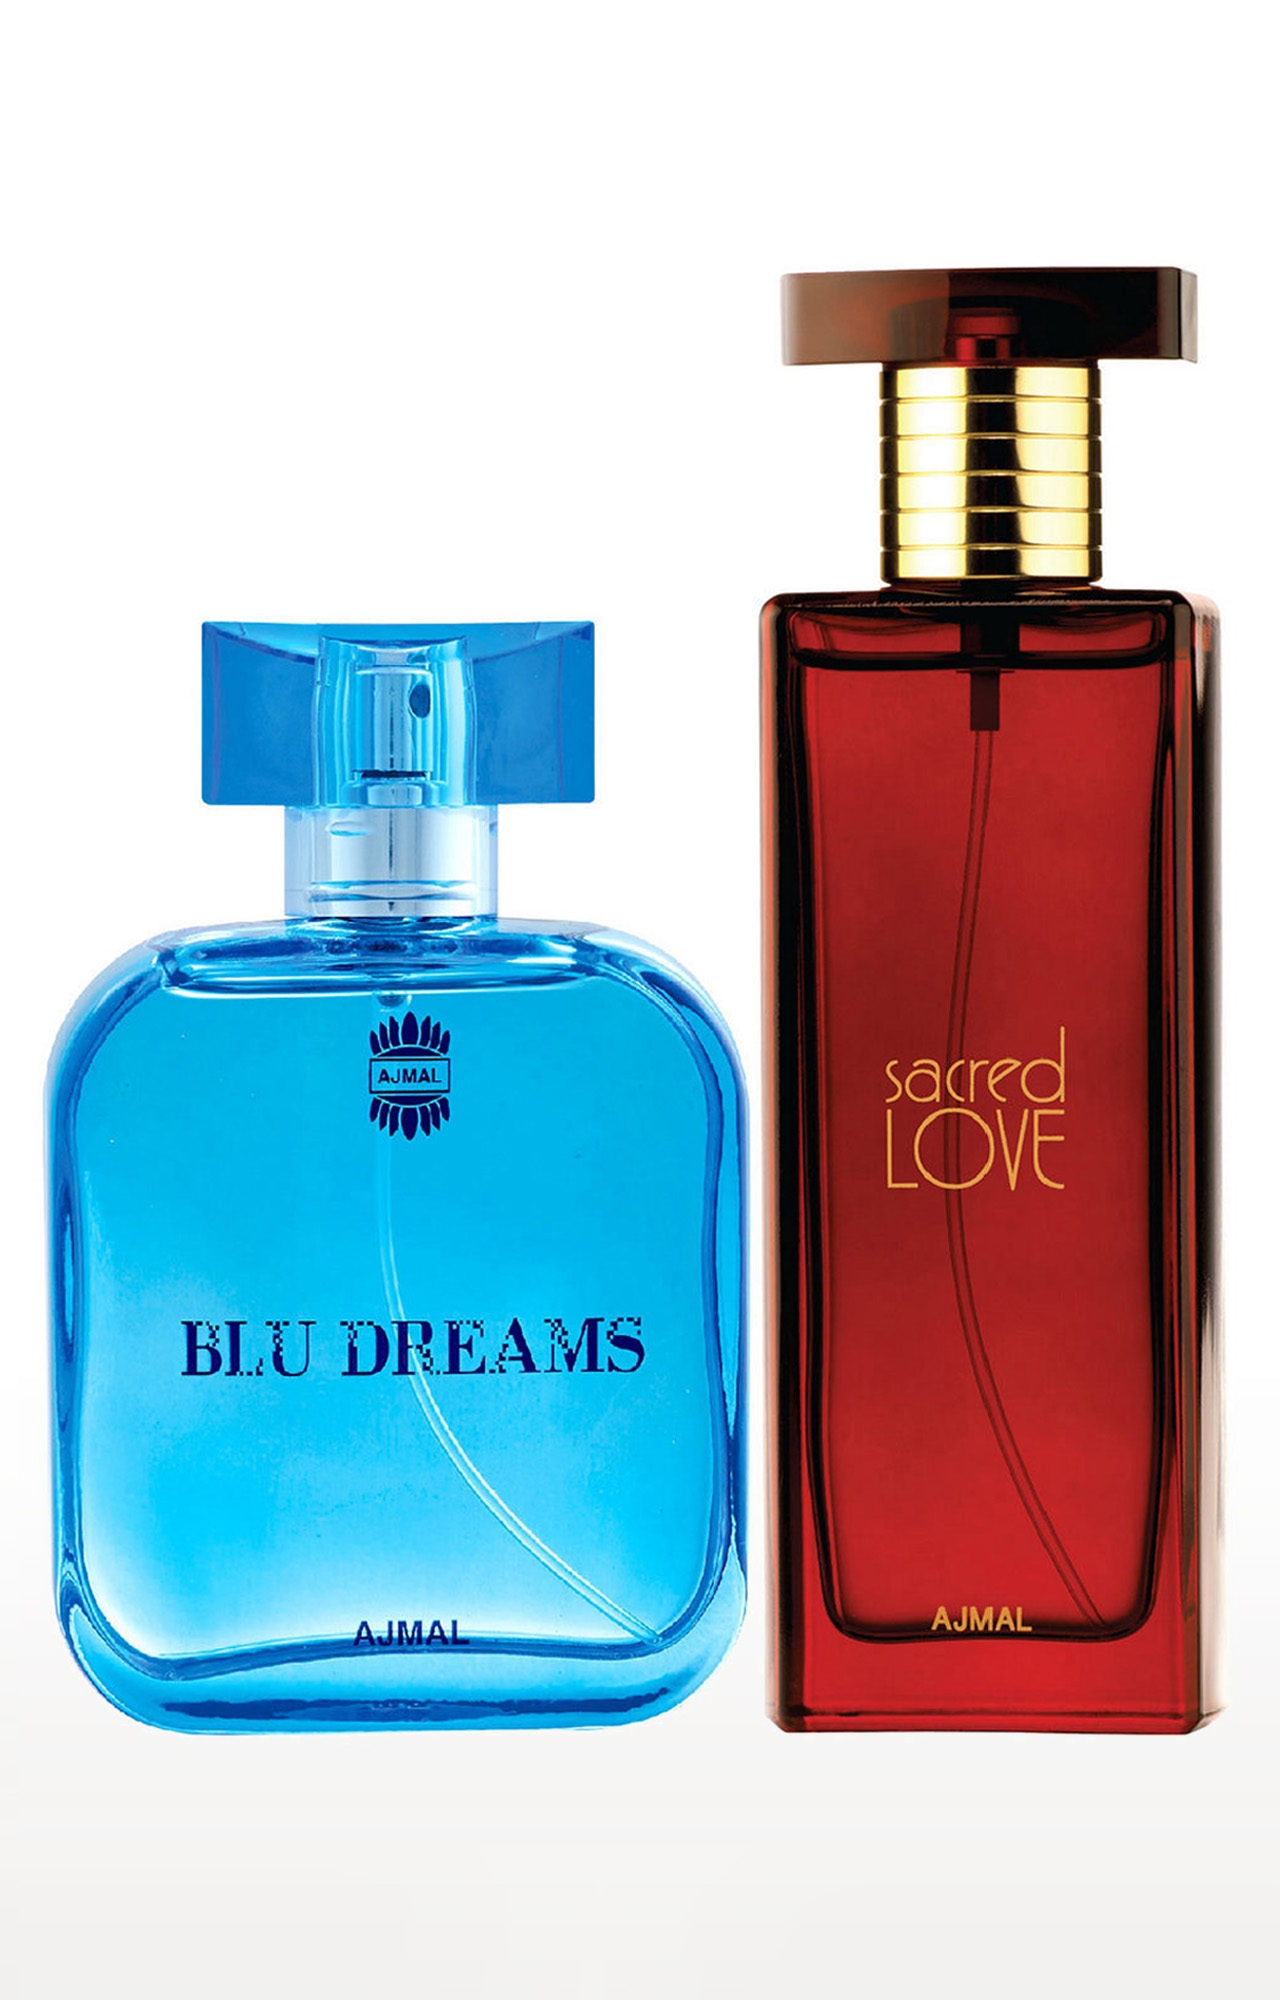 Ajmal | Ajmal Blu Dreams Edp Citrus Fruity Perfume 100Ml For Men And Sacred Love Edp Floral Musky Perfume 50Ml For Women 0